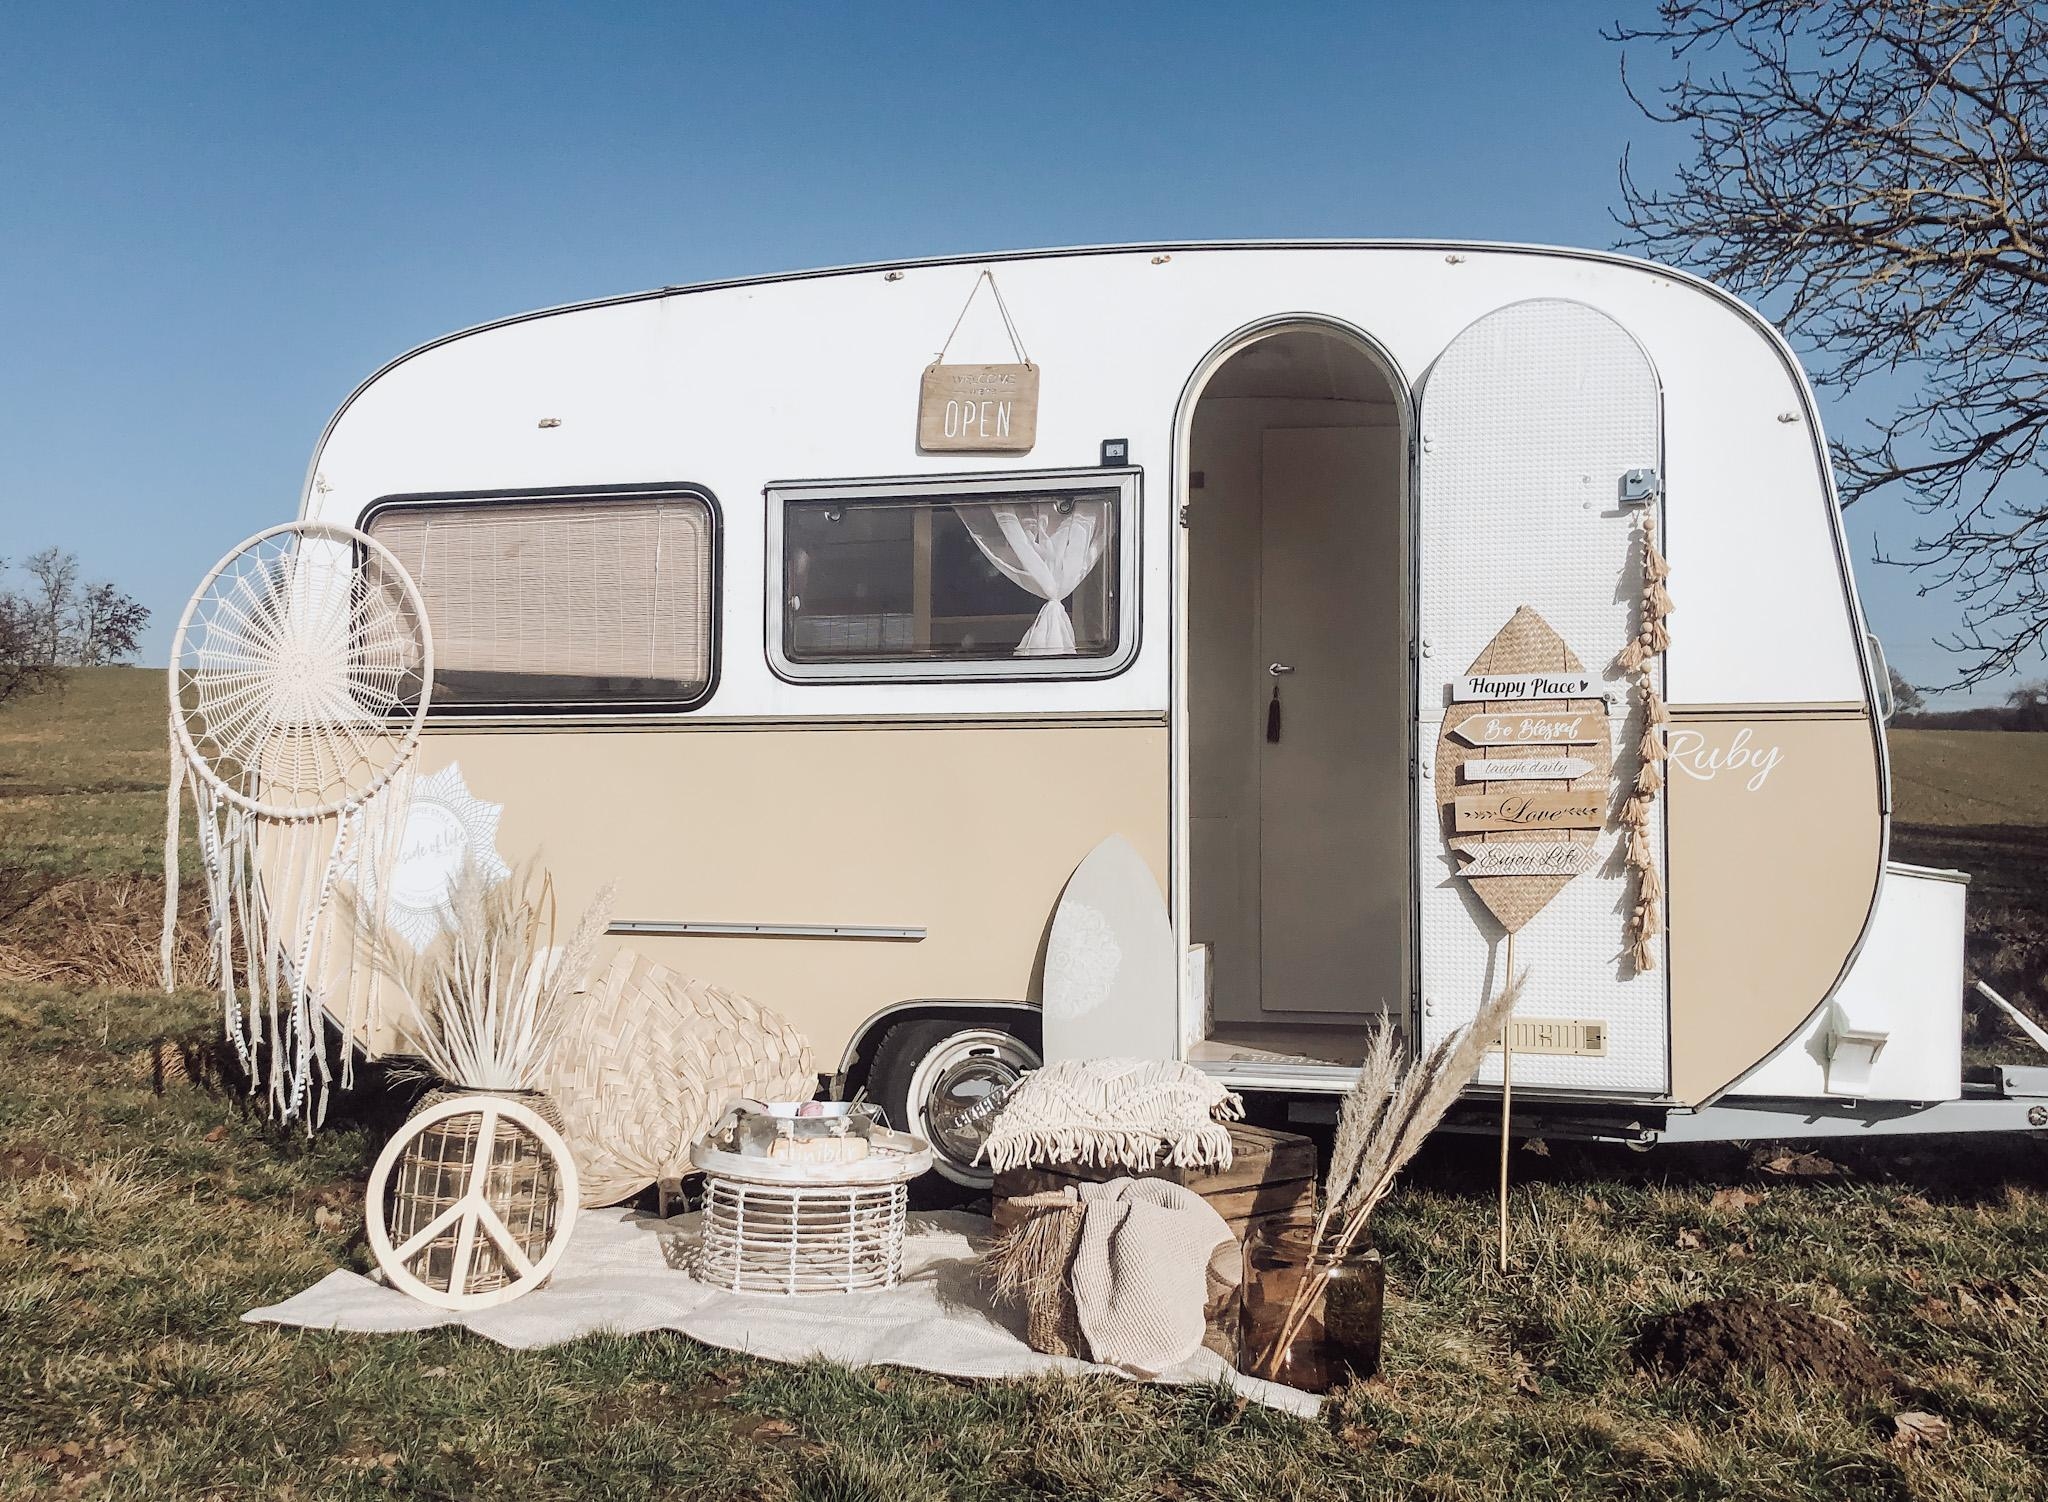 Ruby the Boho Caravan ☮︎
#summerfeeling #goodvibes #freespirit